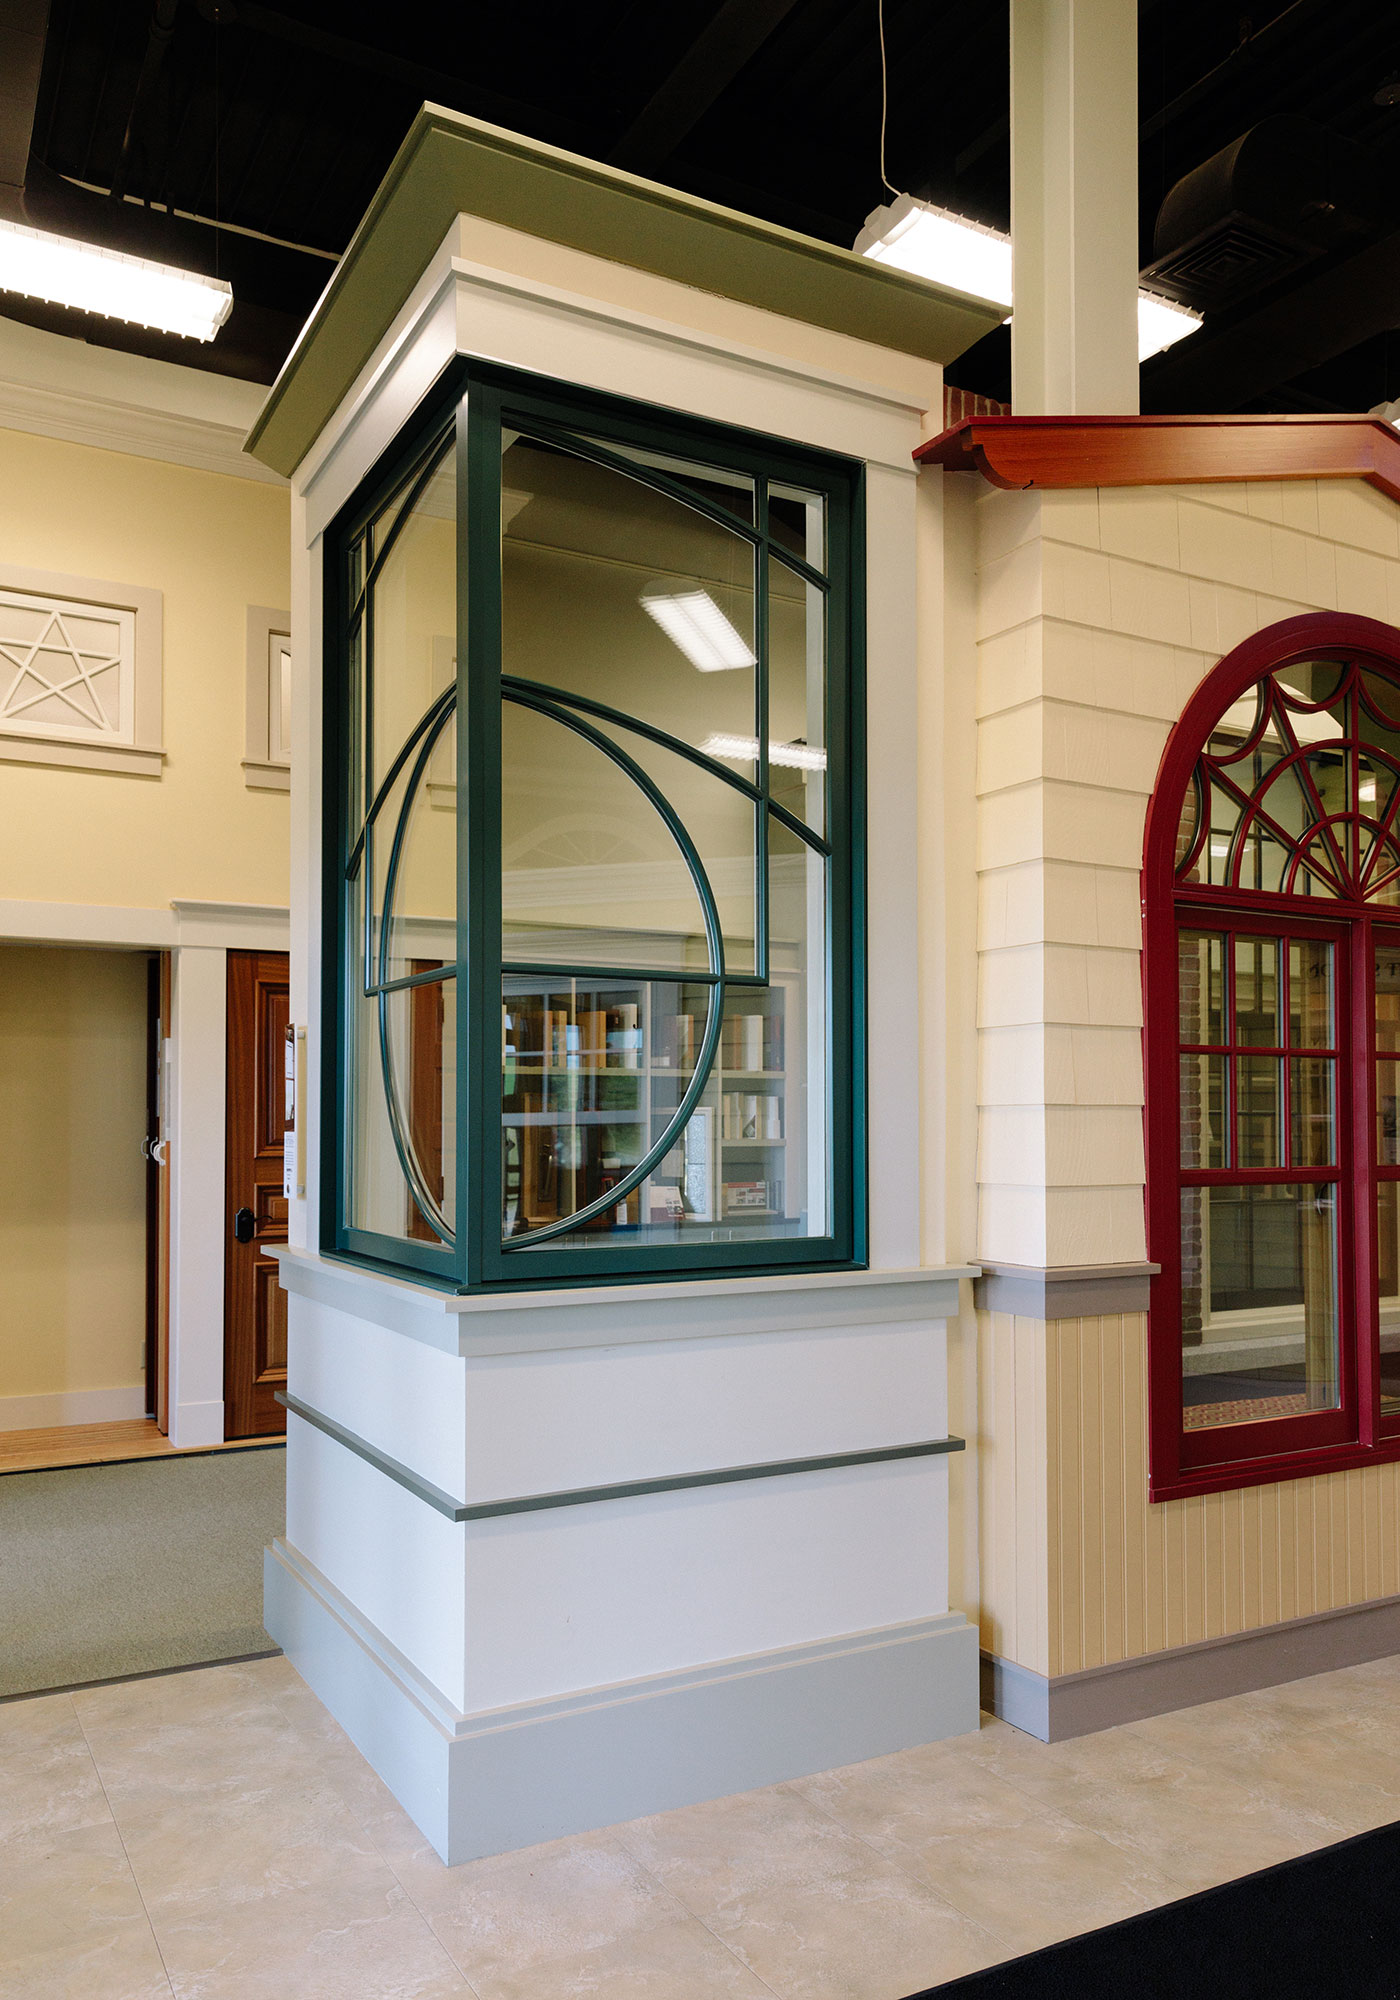 A custom corner window display in the Marvin Design Gallery